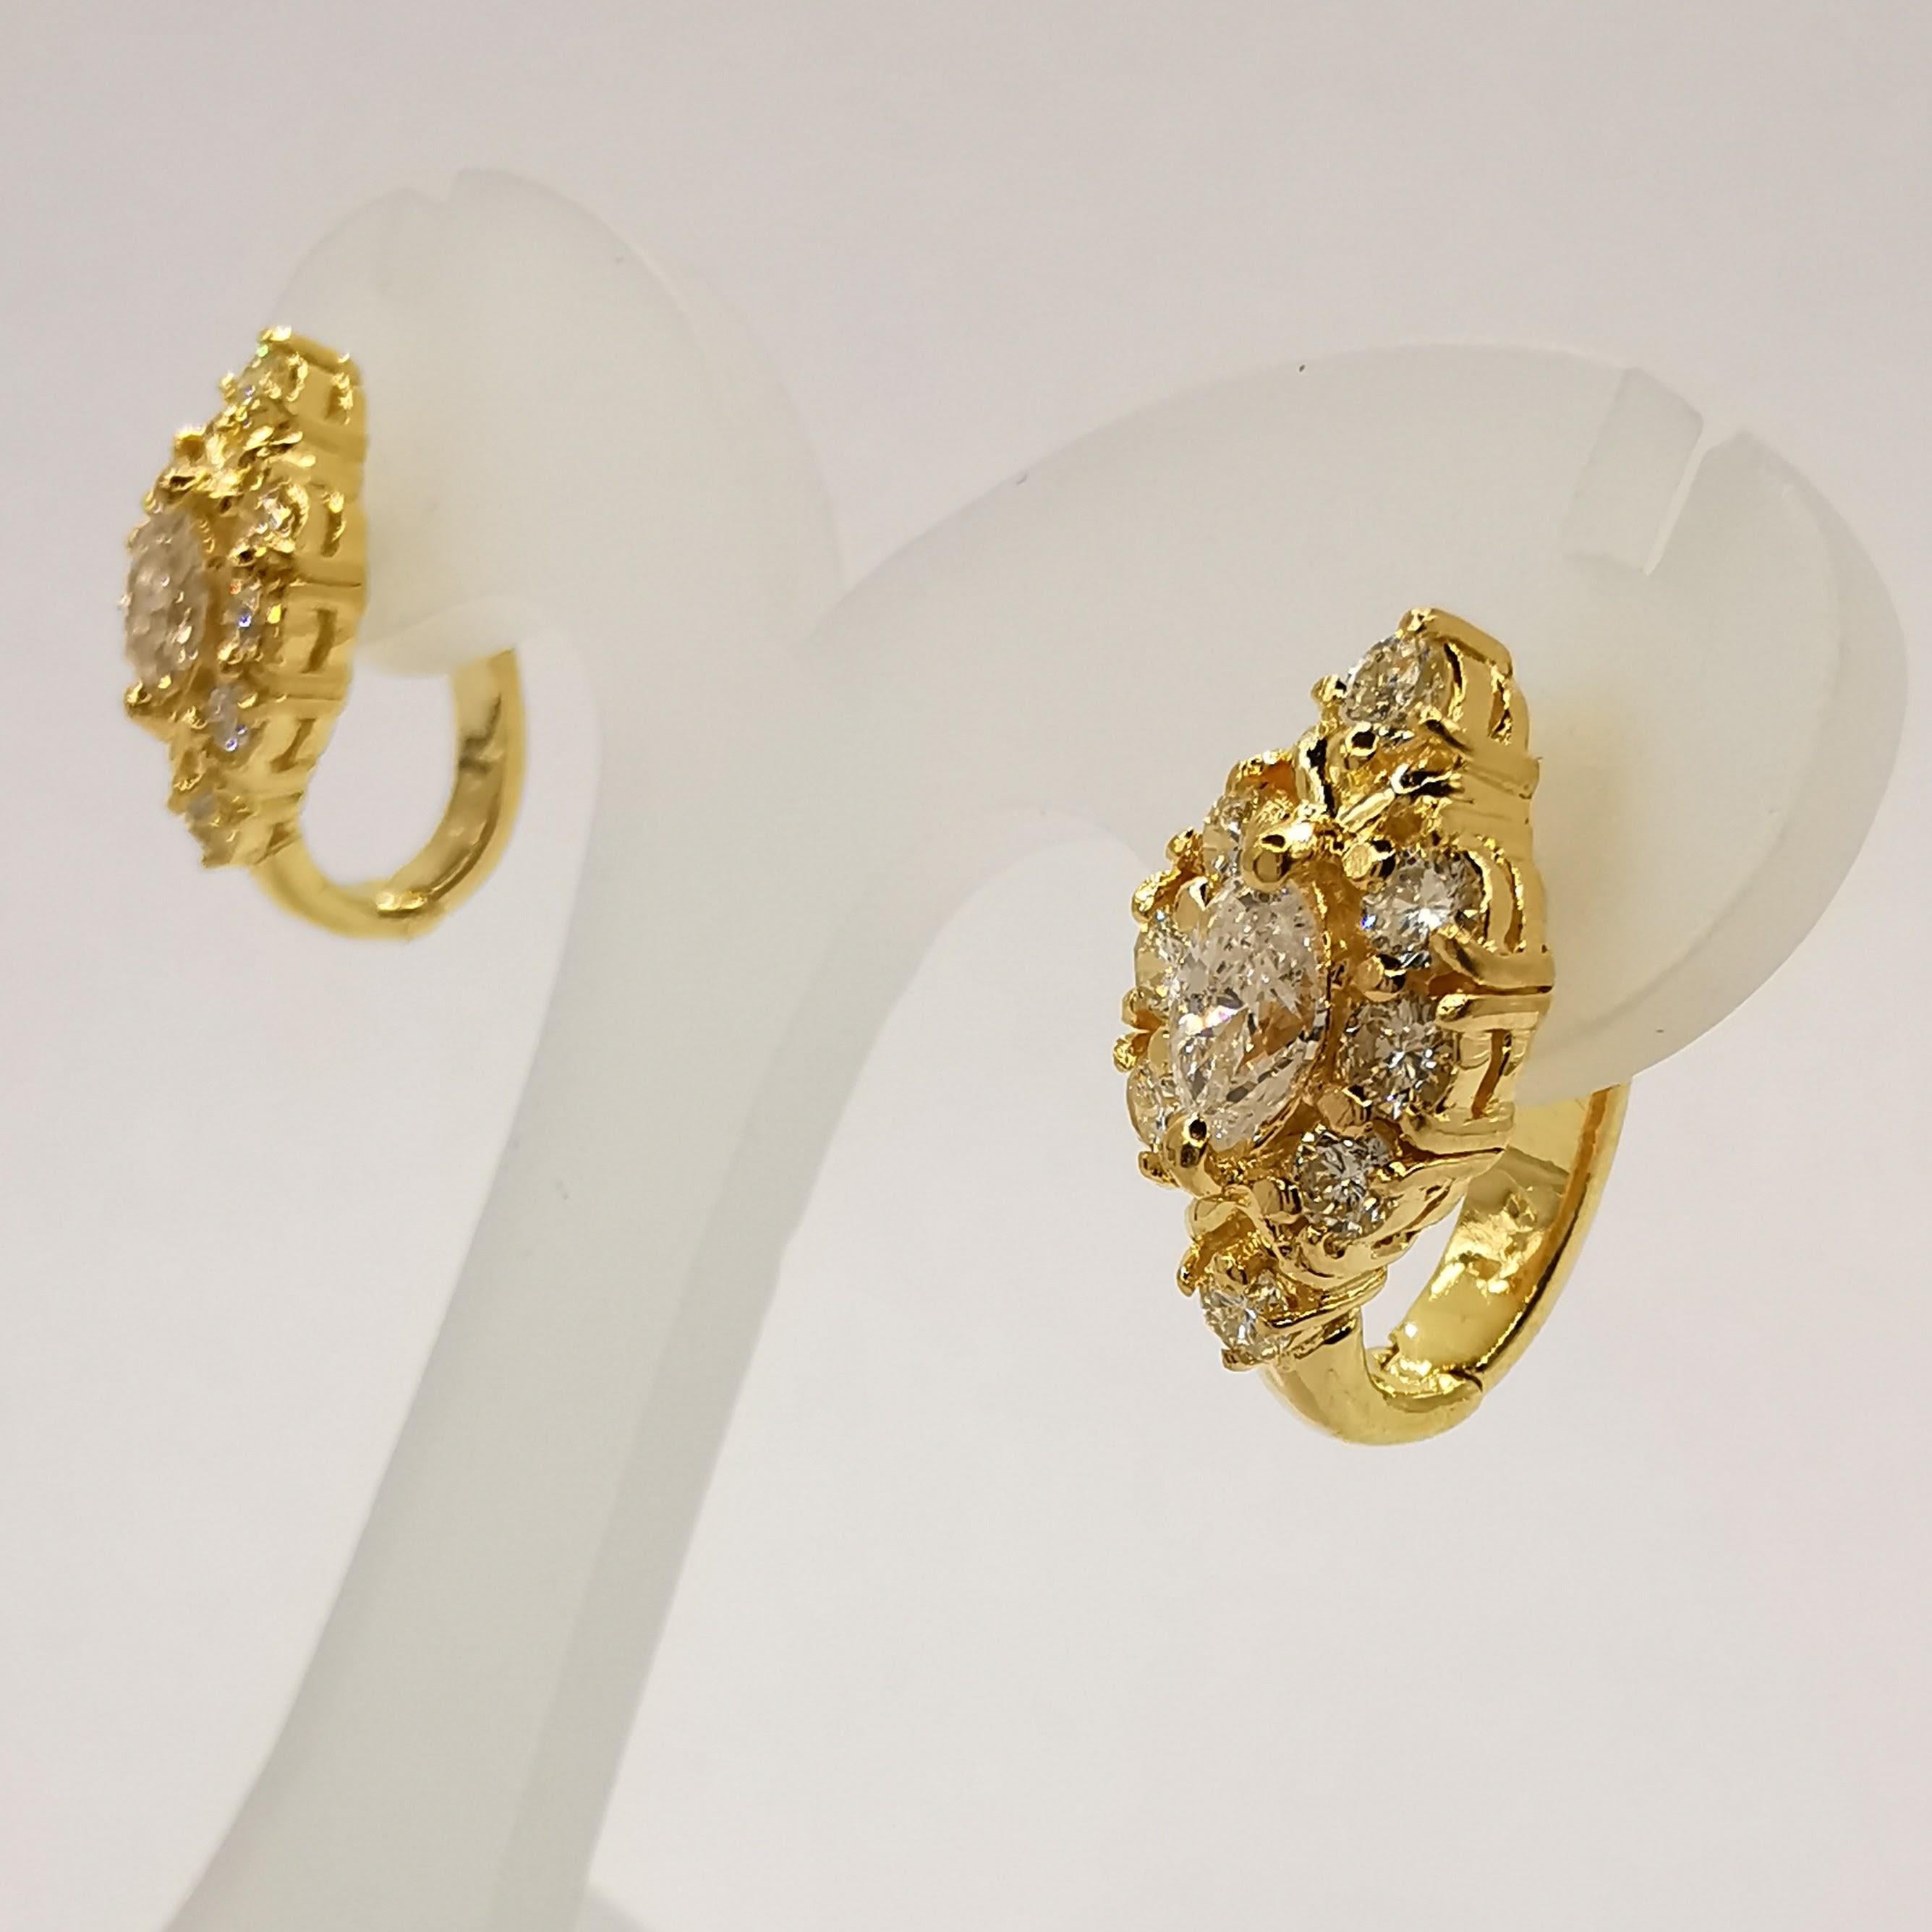 Contemporain 1.15 Carat Marquise Diamond Earrings in Yellow Gold en vente